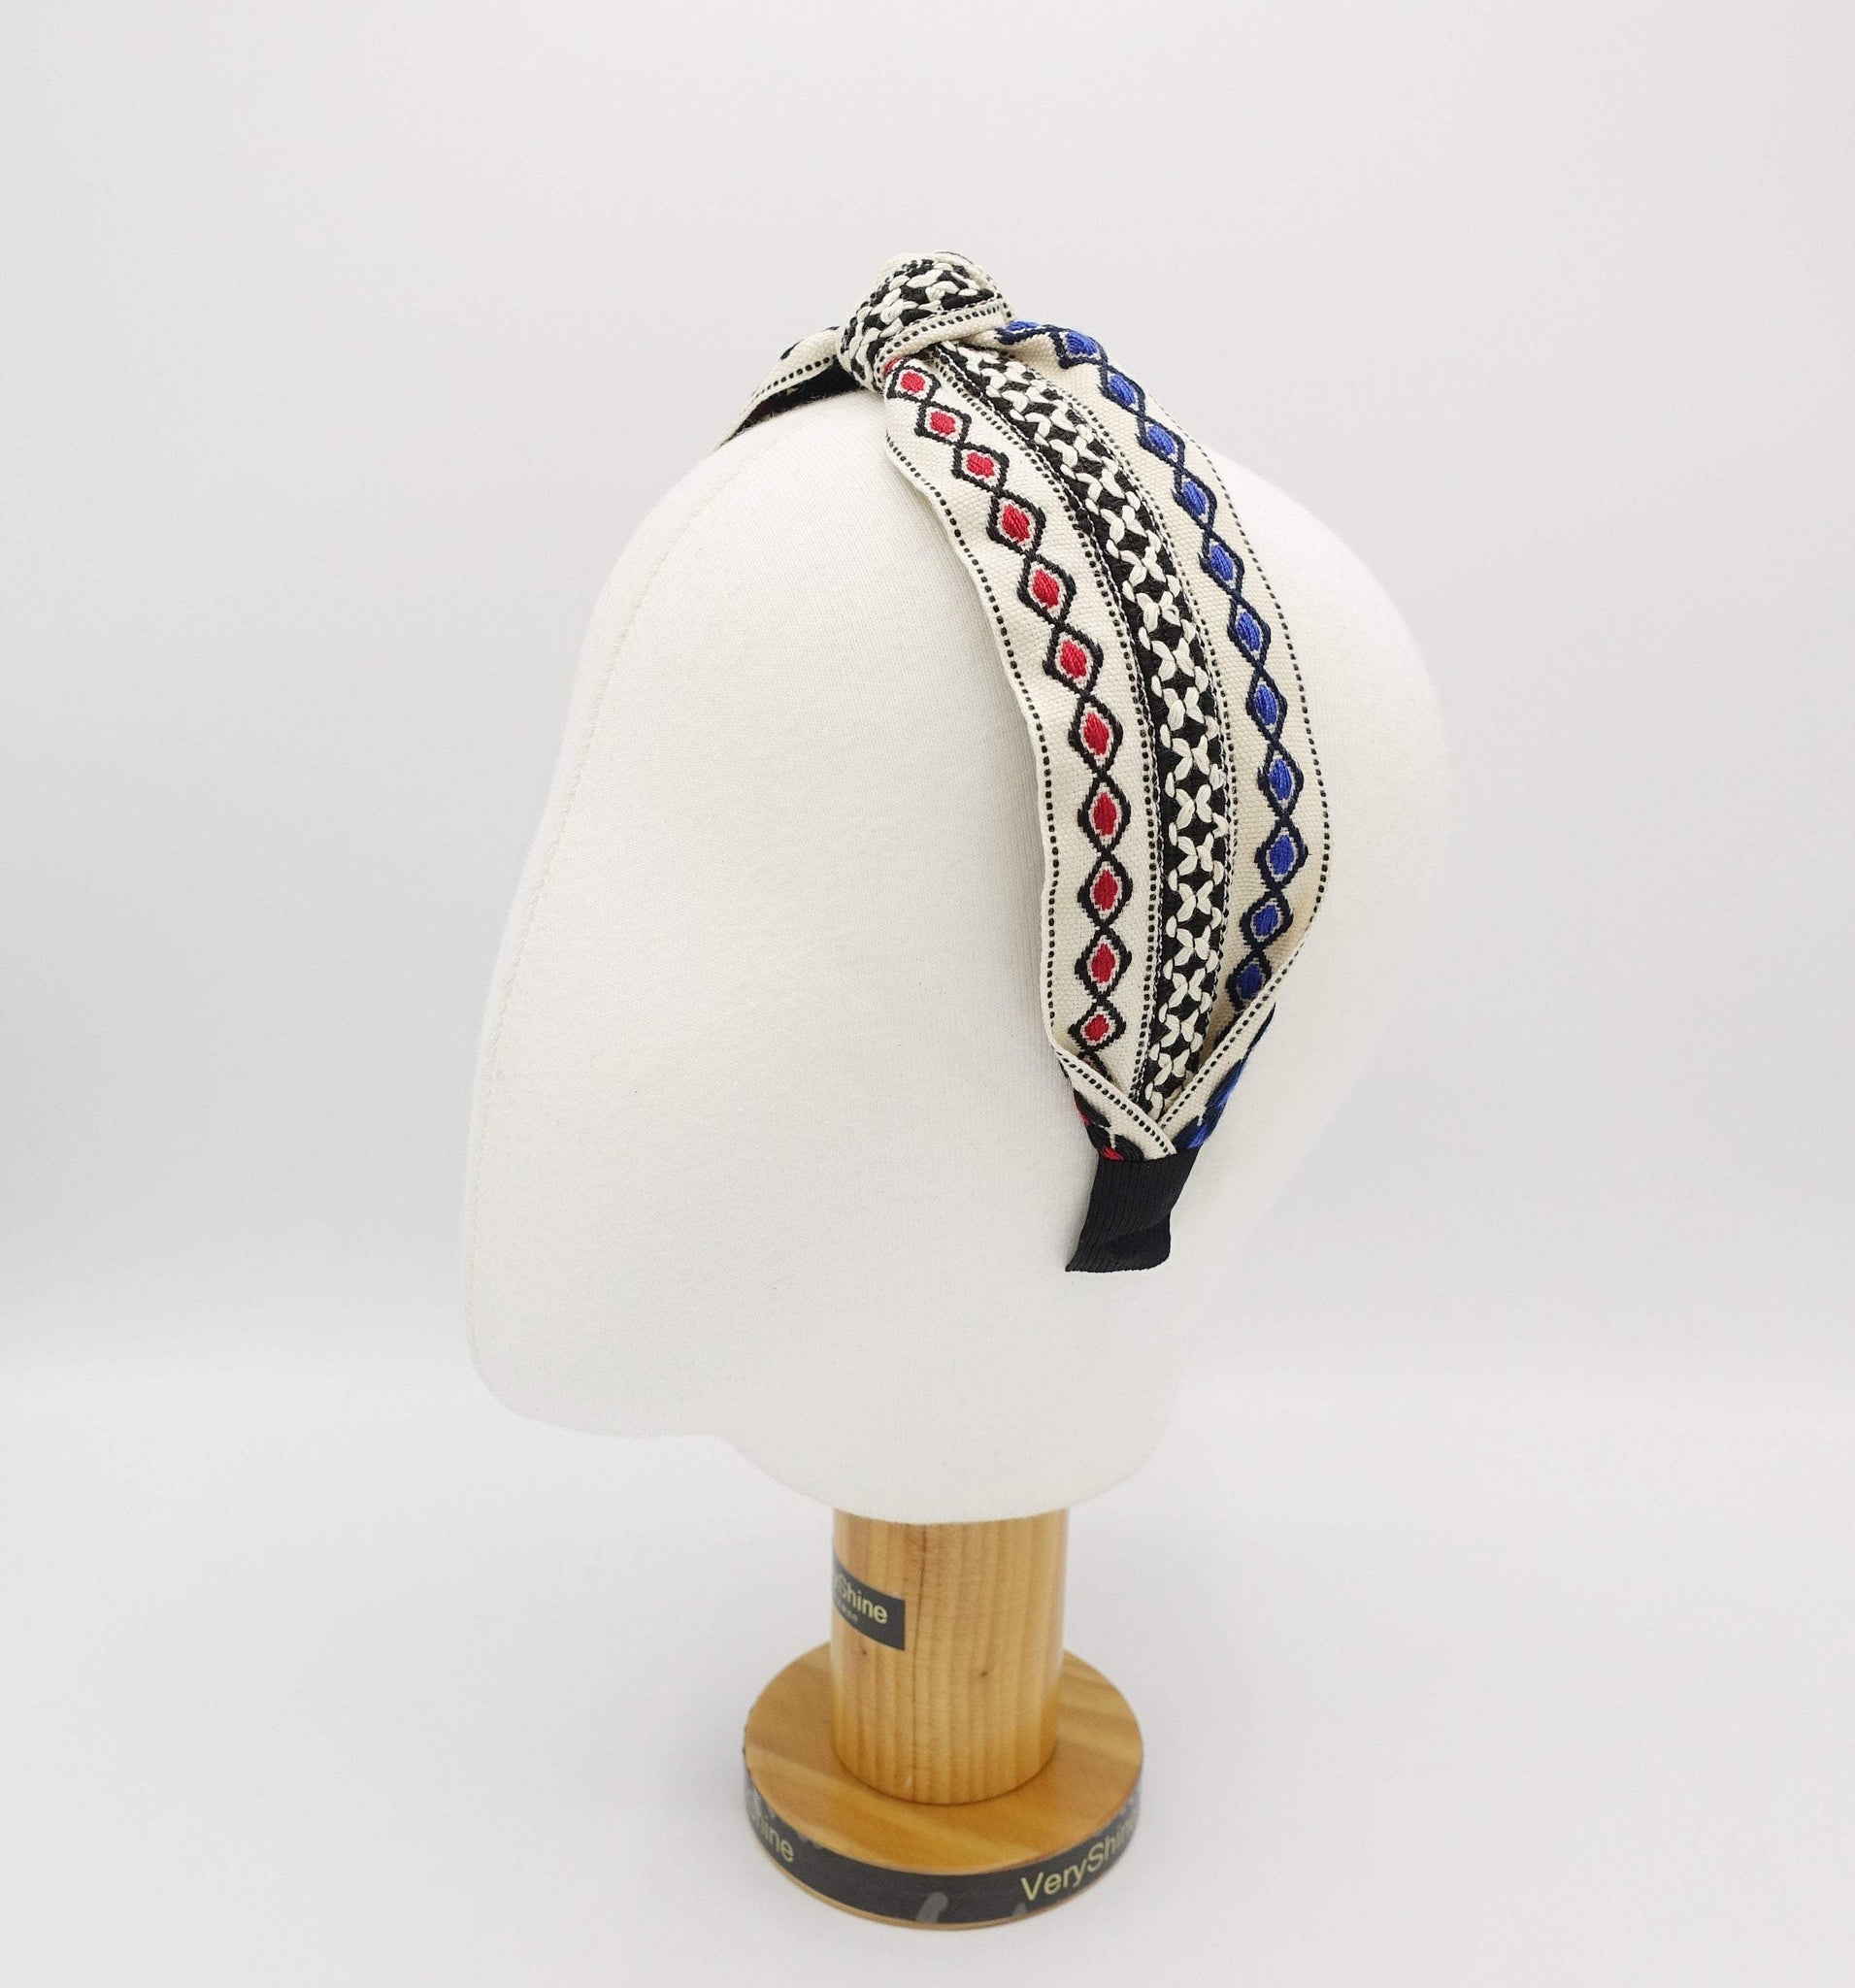 VeryShine Headband Cream white embroidered pattern headband bohemian top knot hairband stylish hair accessory for women